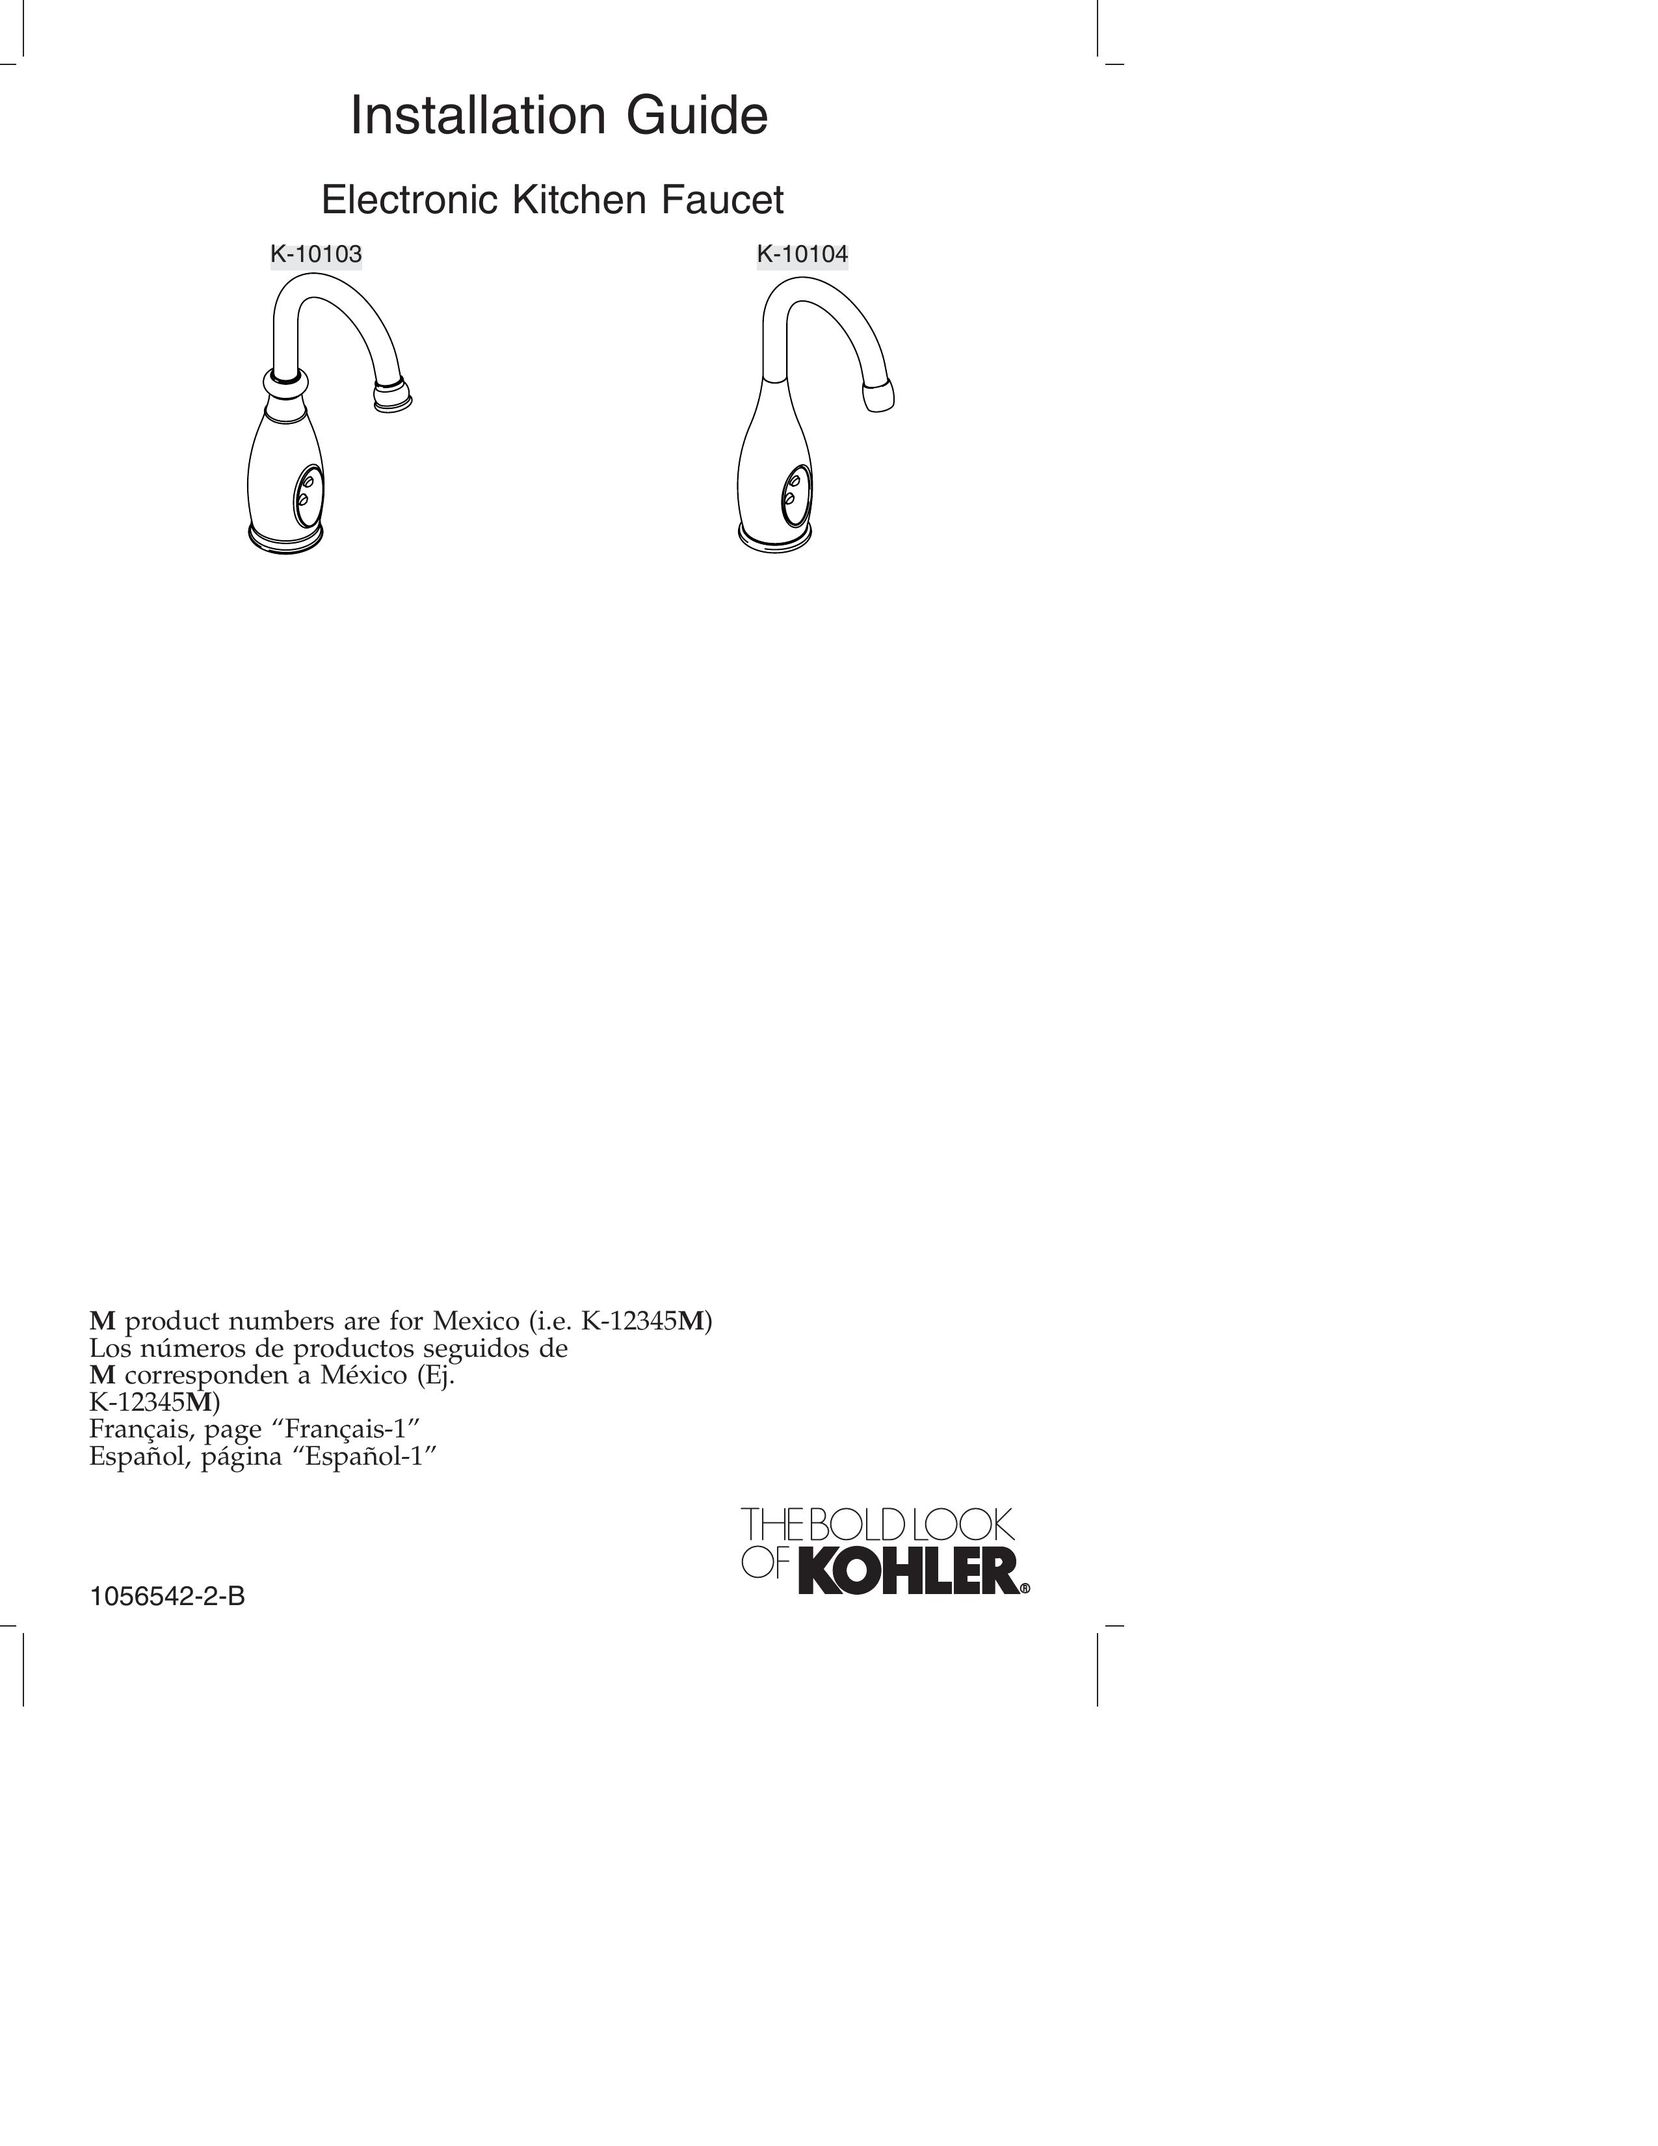 Kohler K-10103 Plumbing Product User Manual